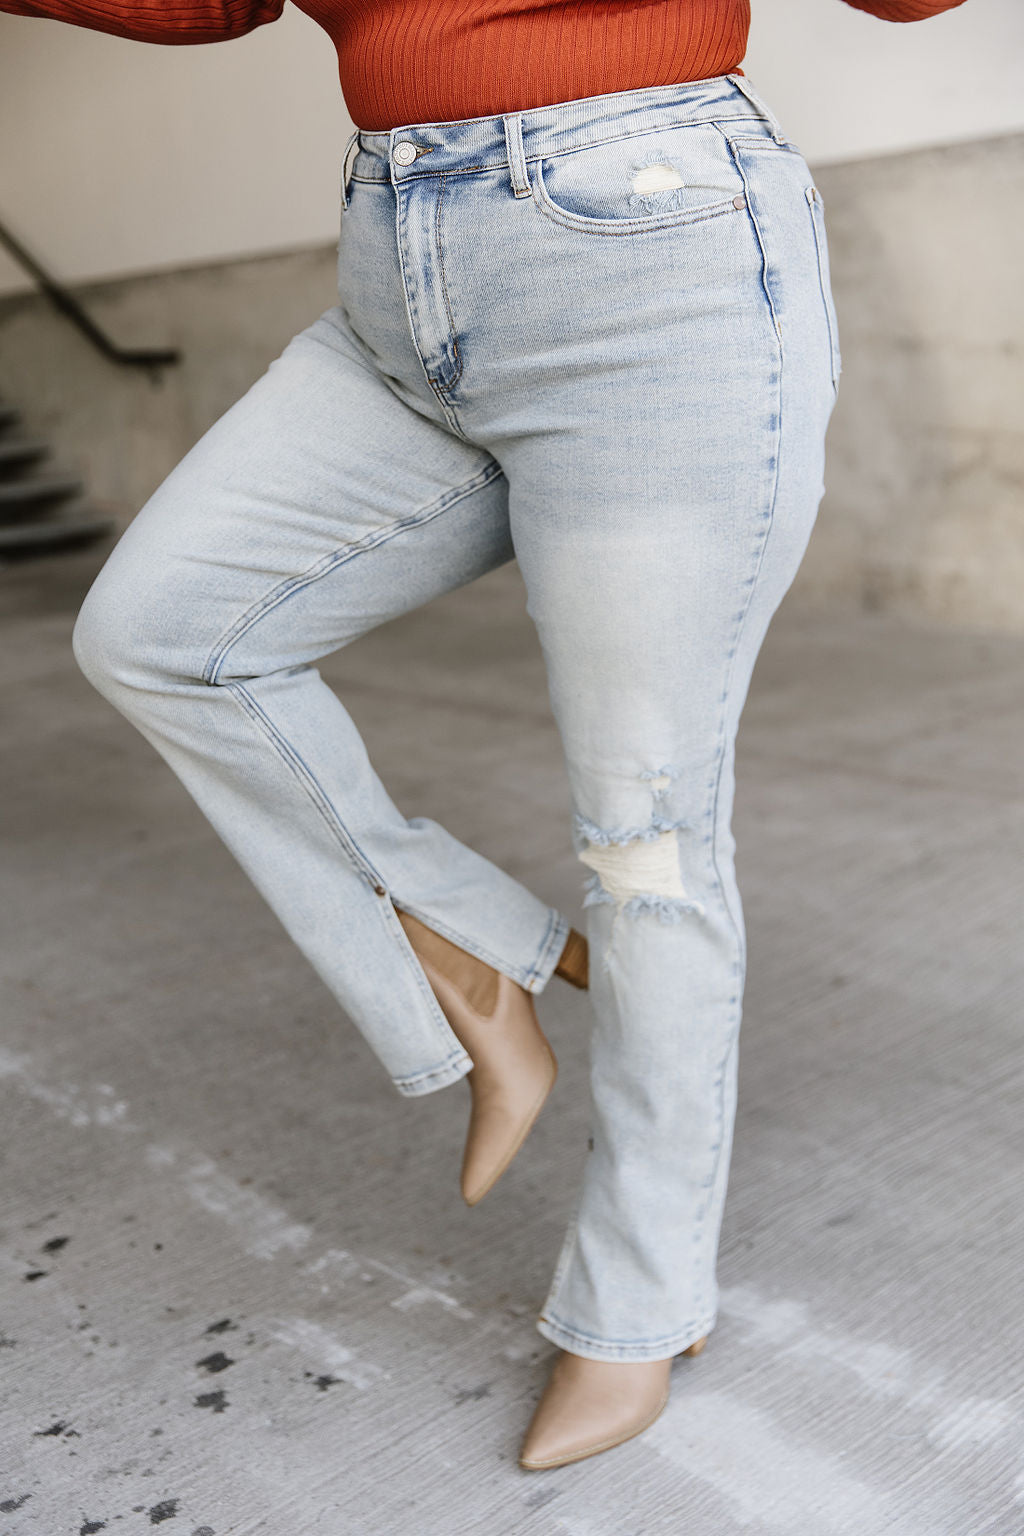 Lowell Straight Leg Jeans - Mindy Mae's Marketcomfy cute hoodies